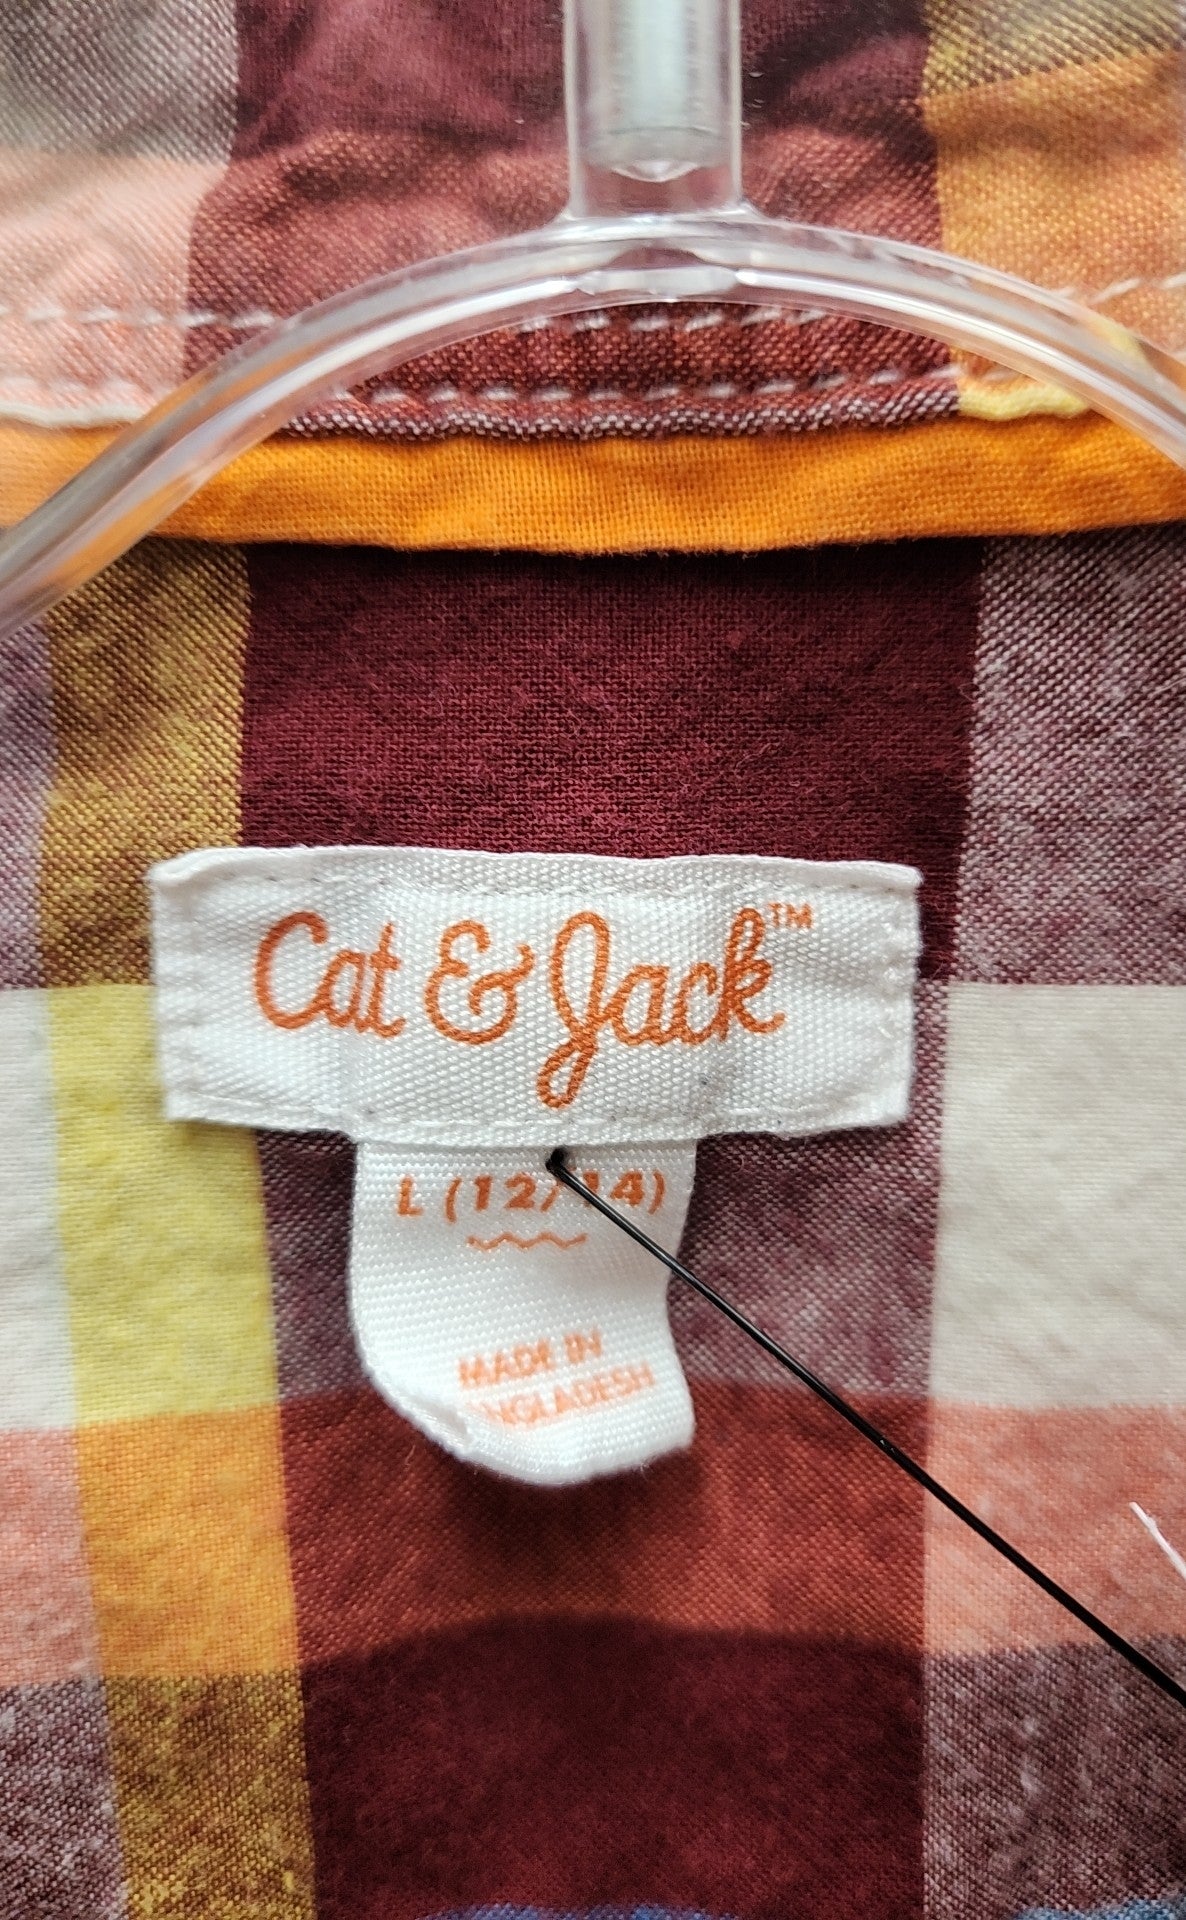 Cat & Jack Boy's Size 12/14 Red Shirt